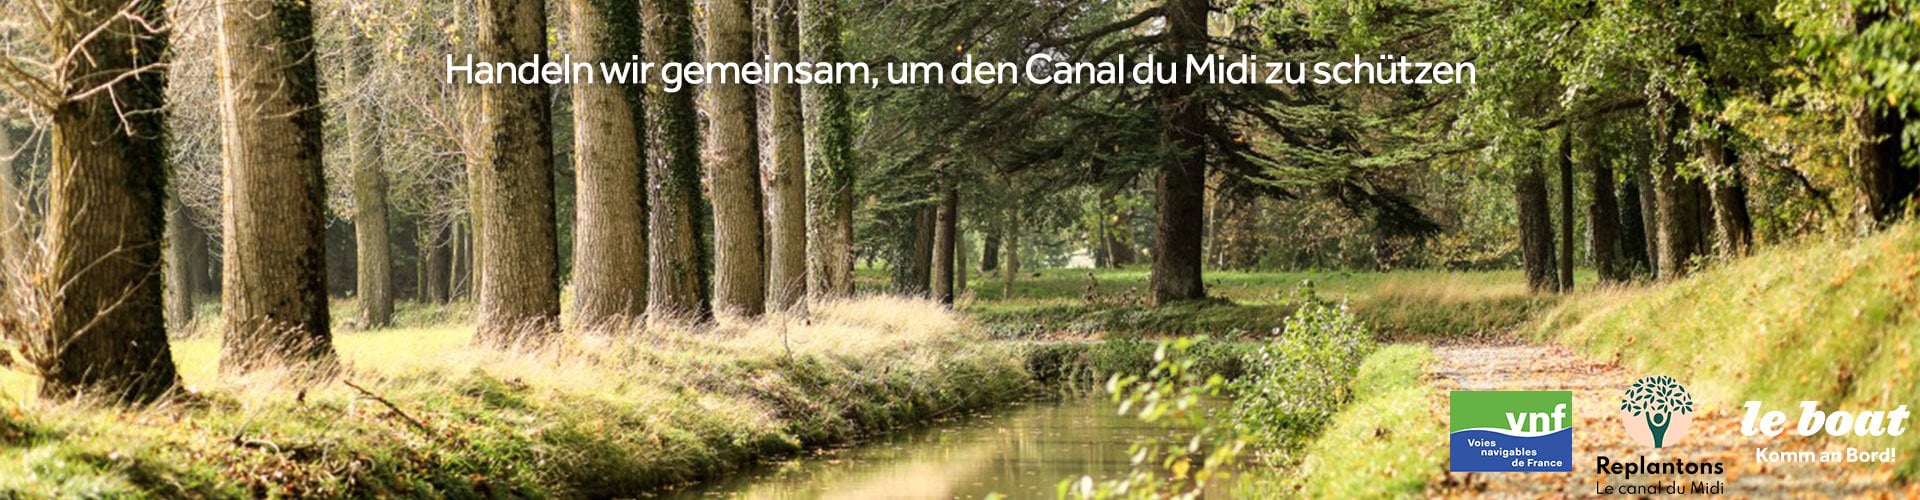 VNF- Gemeinsam handeln, um den Canal du Midi zu schützen 